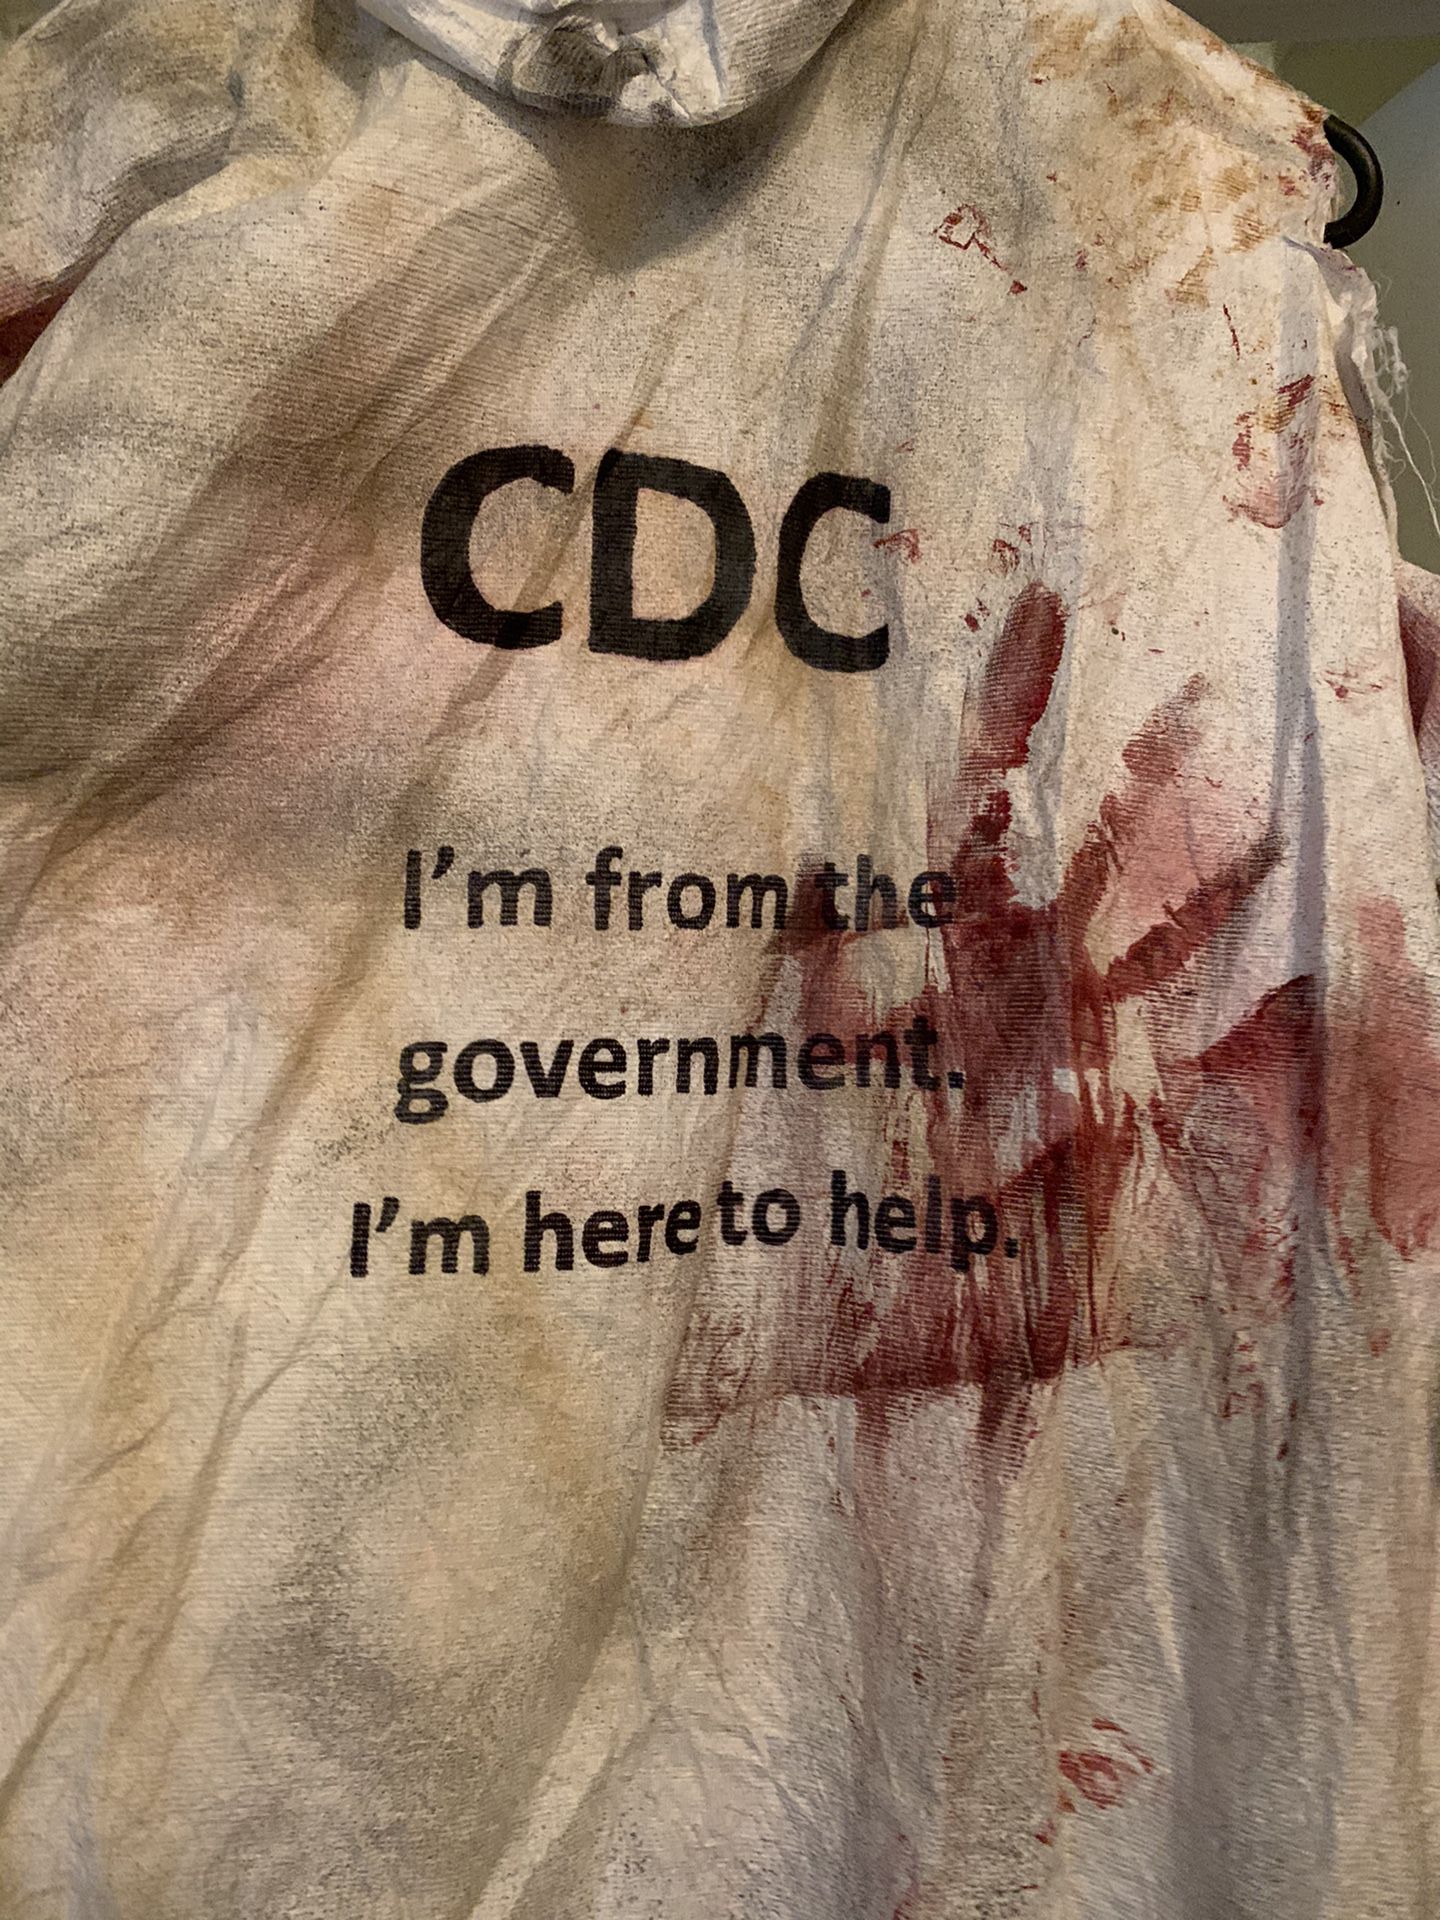 CDC Zombie Attack Victim Costume